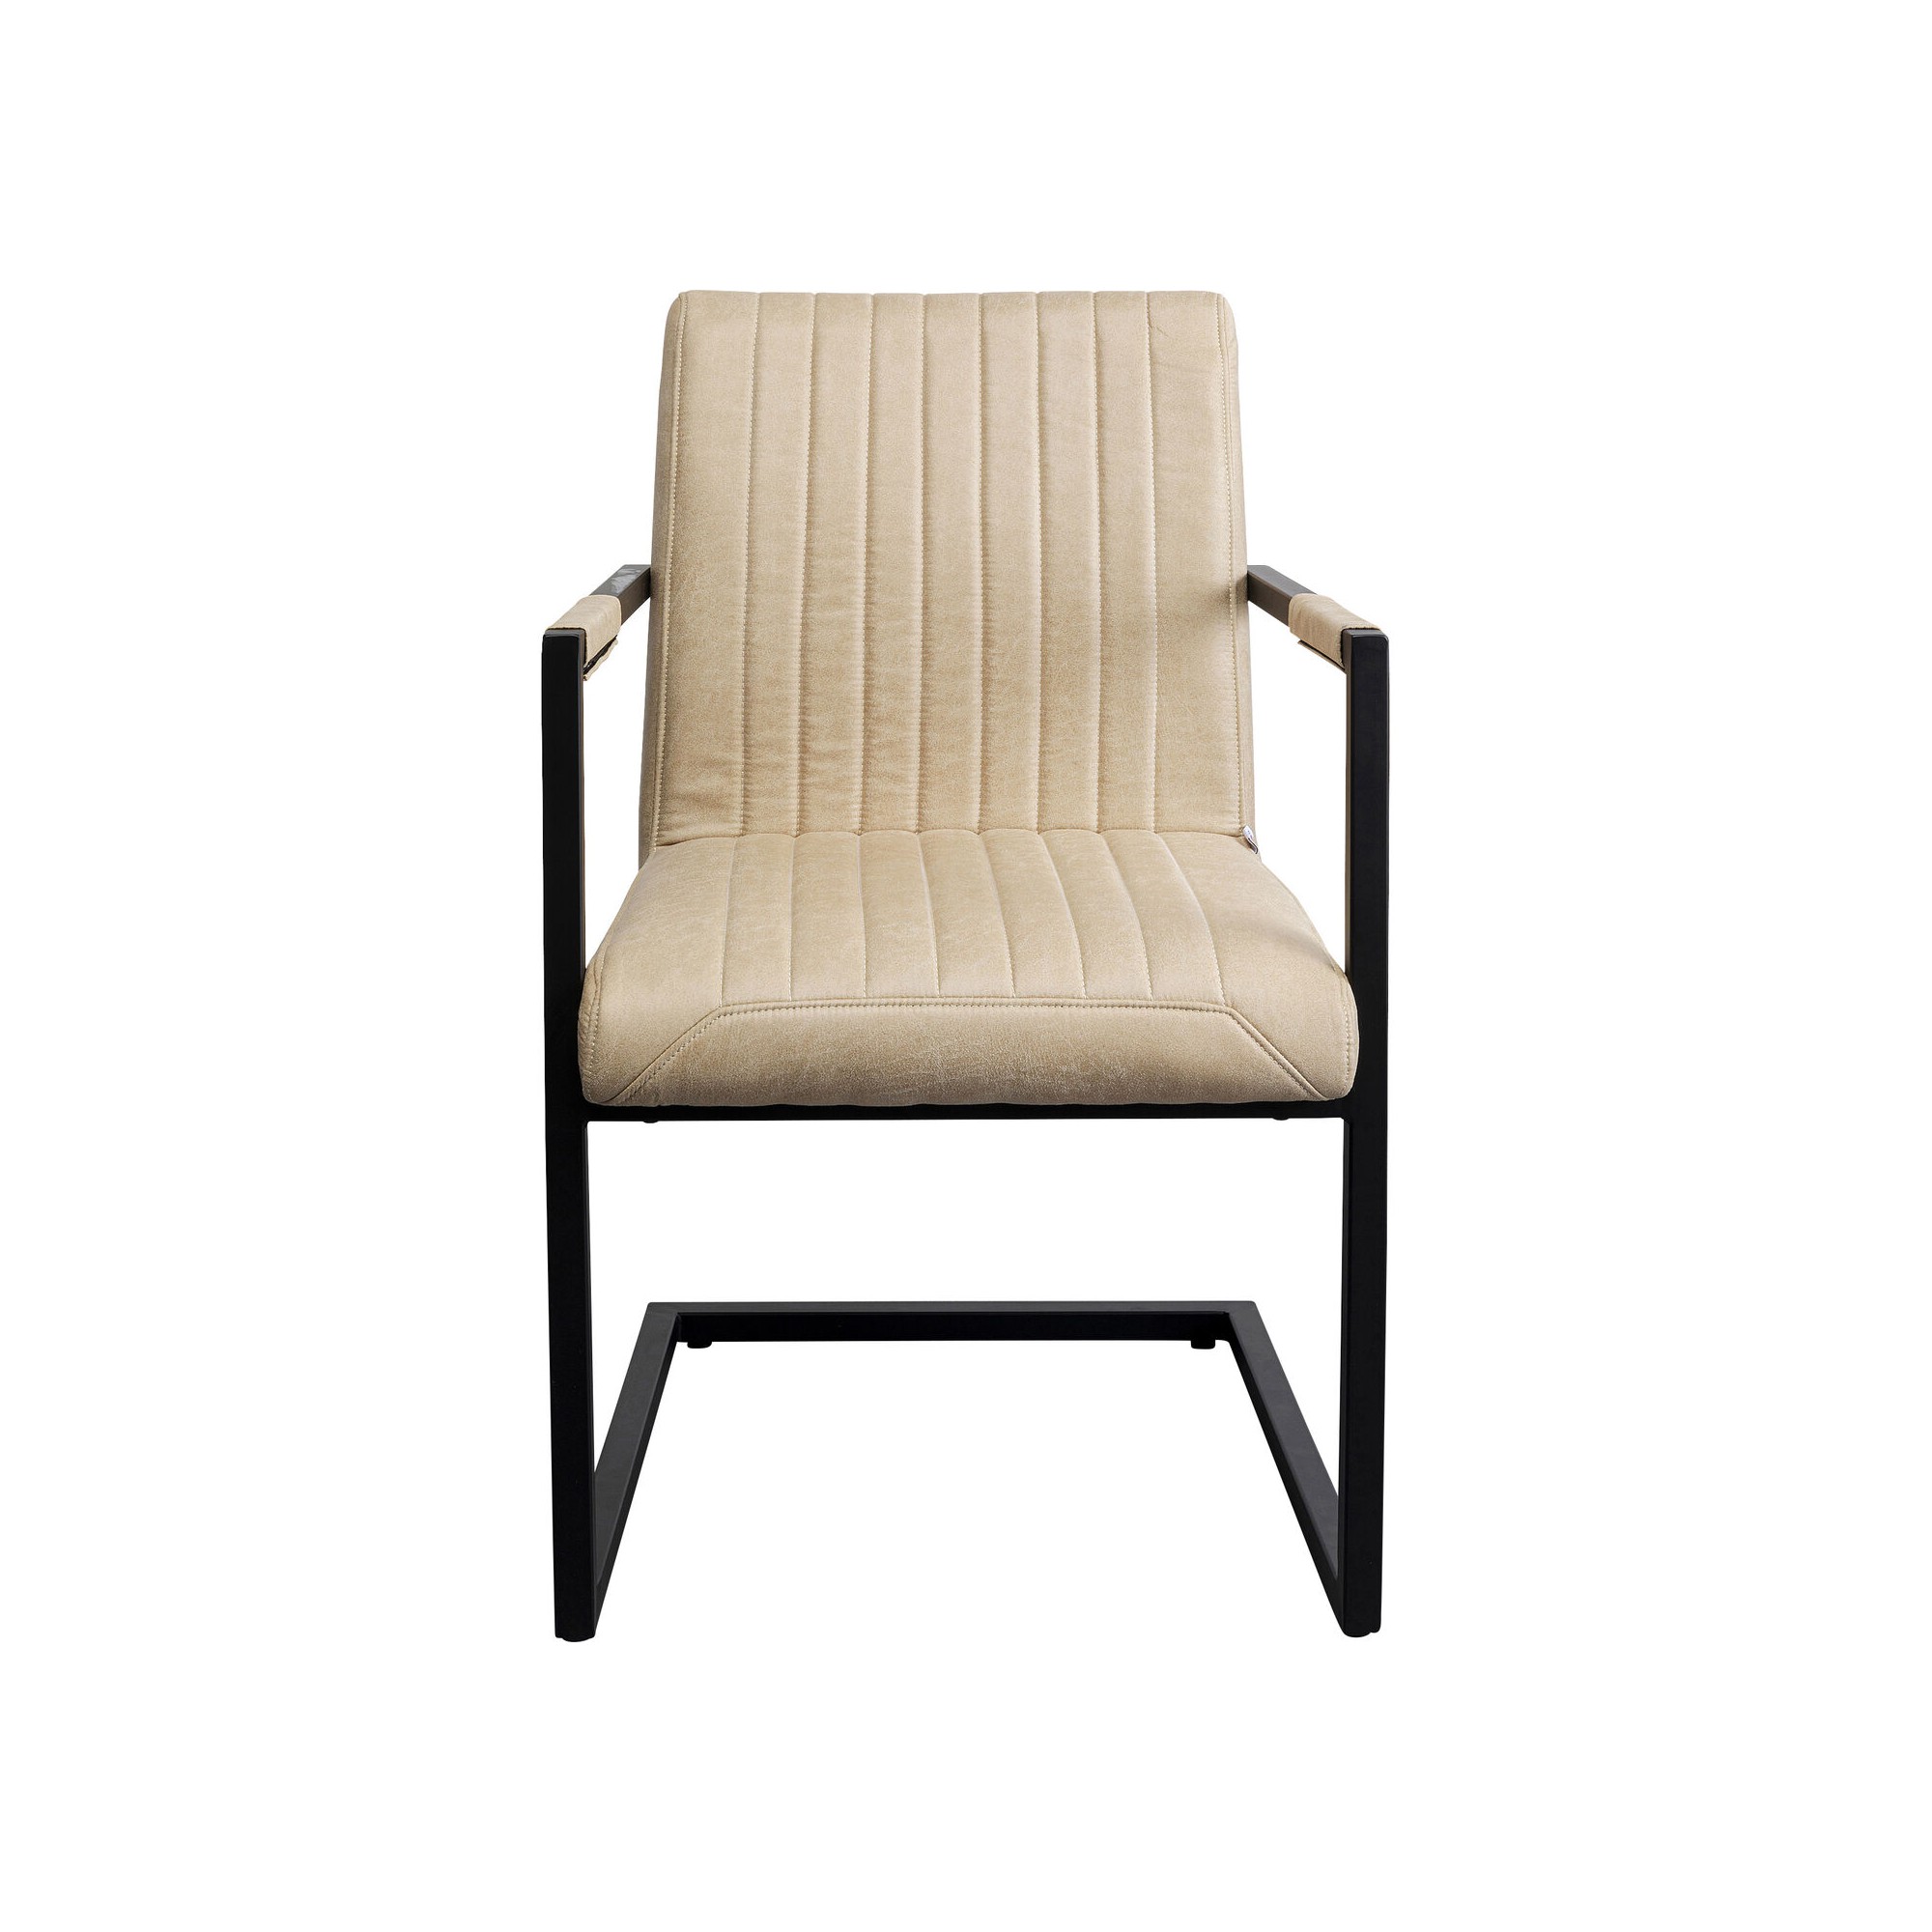 Chaise avec accoudoirs Cantilever Thamos beige Kare Design